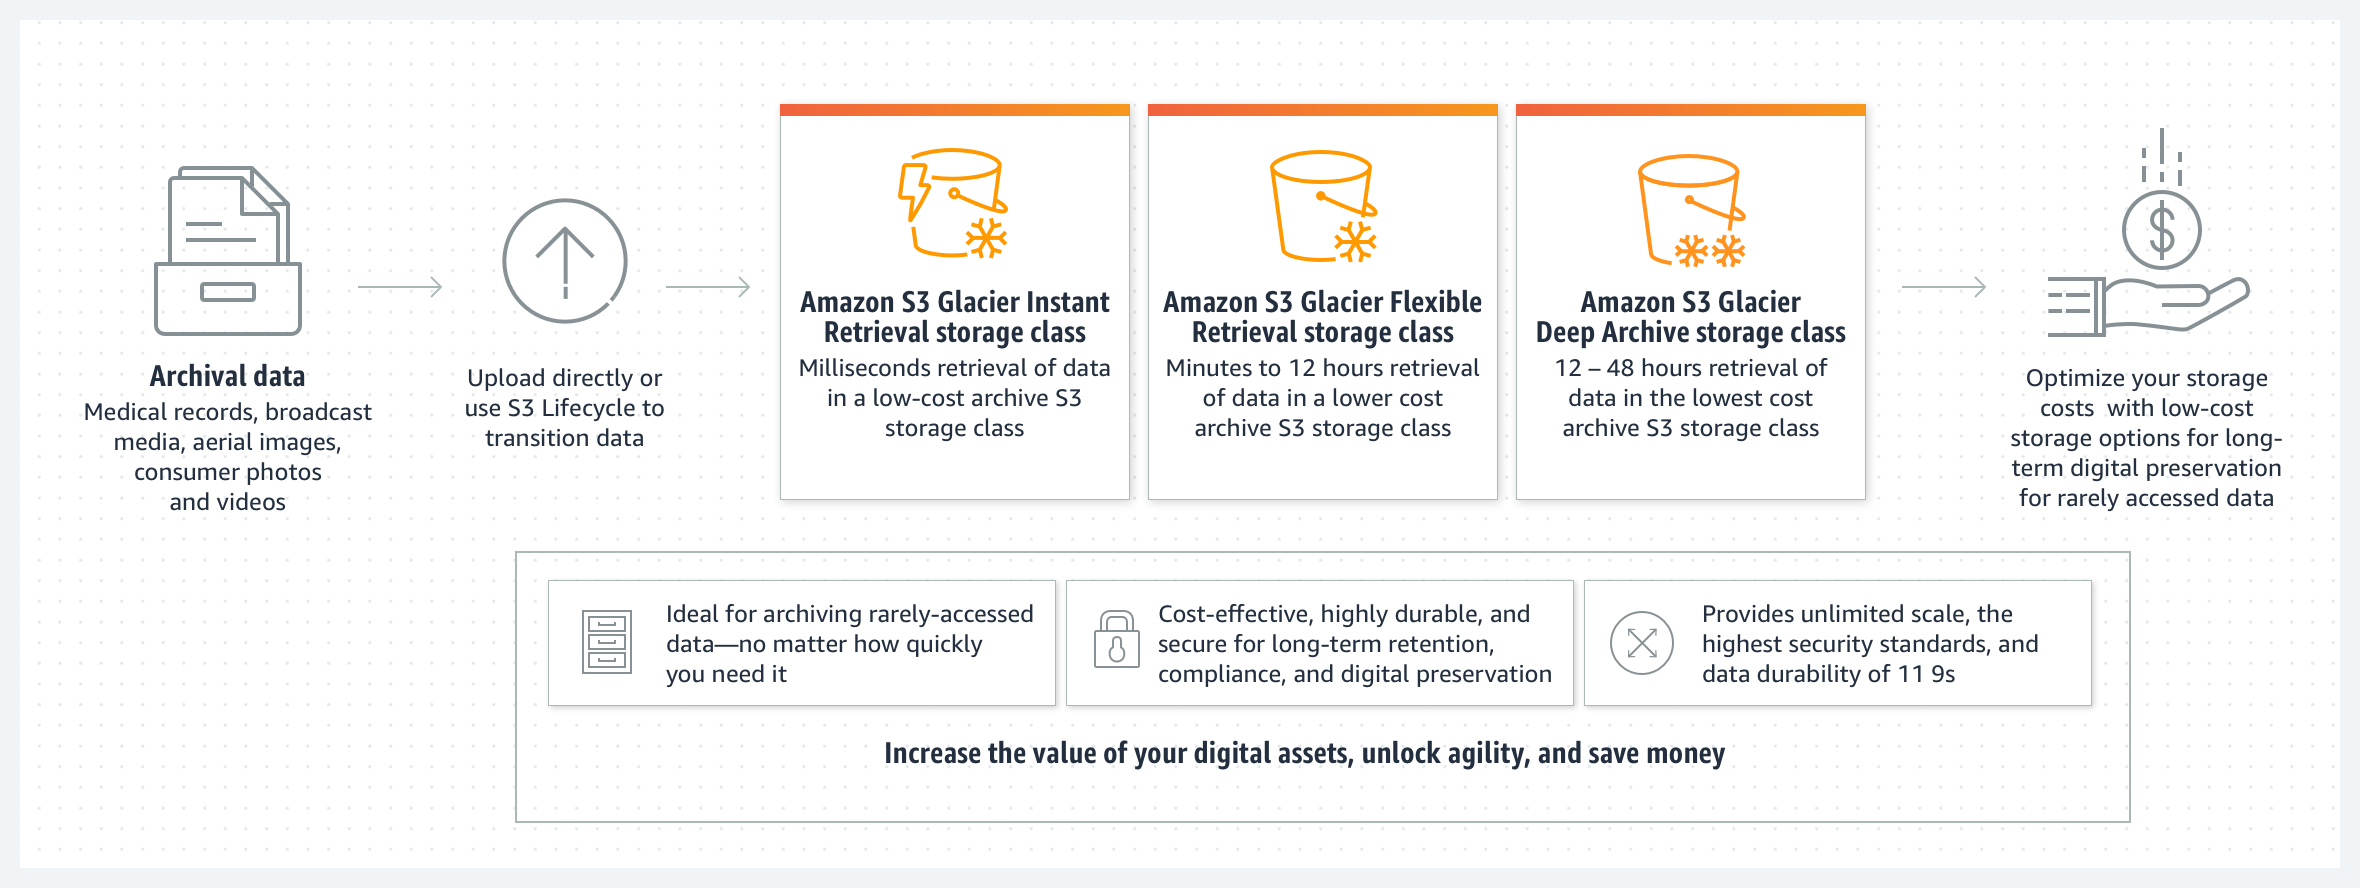 Amazon S3 Glacier storage classes overview